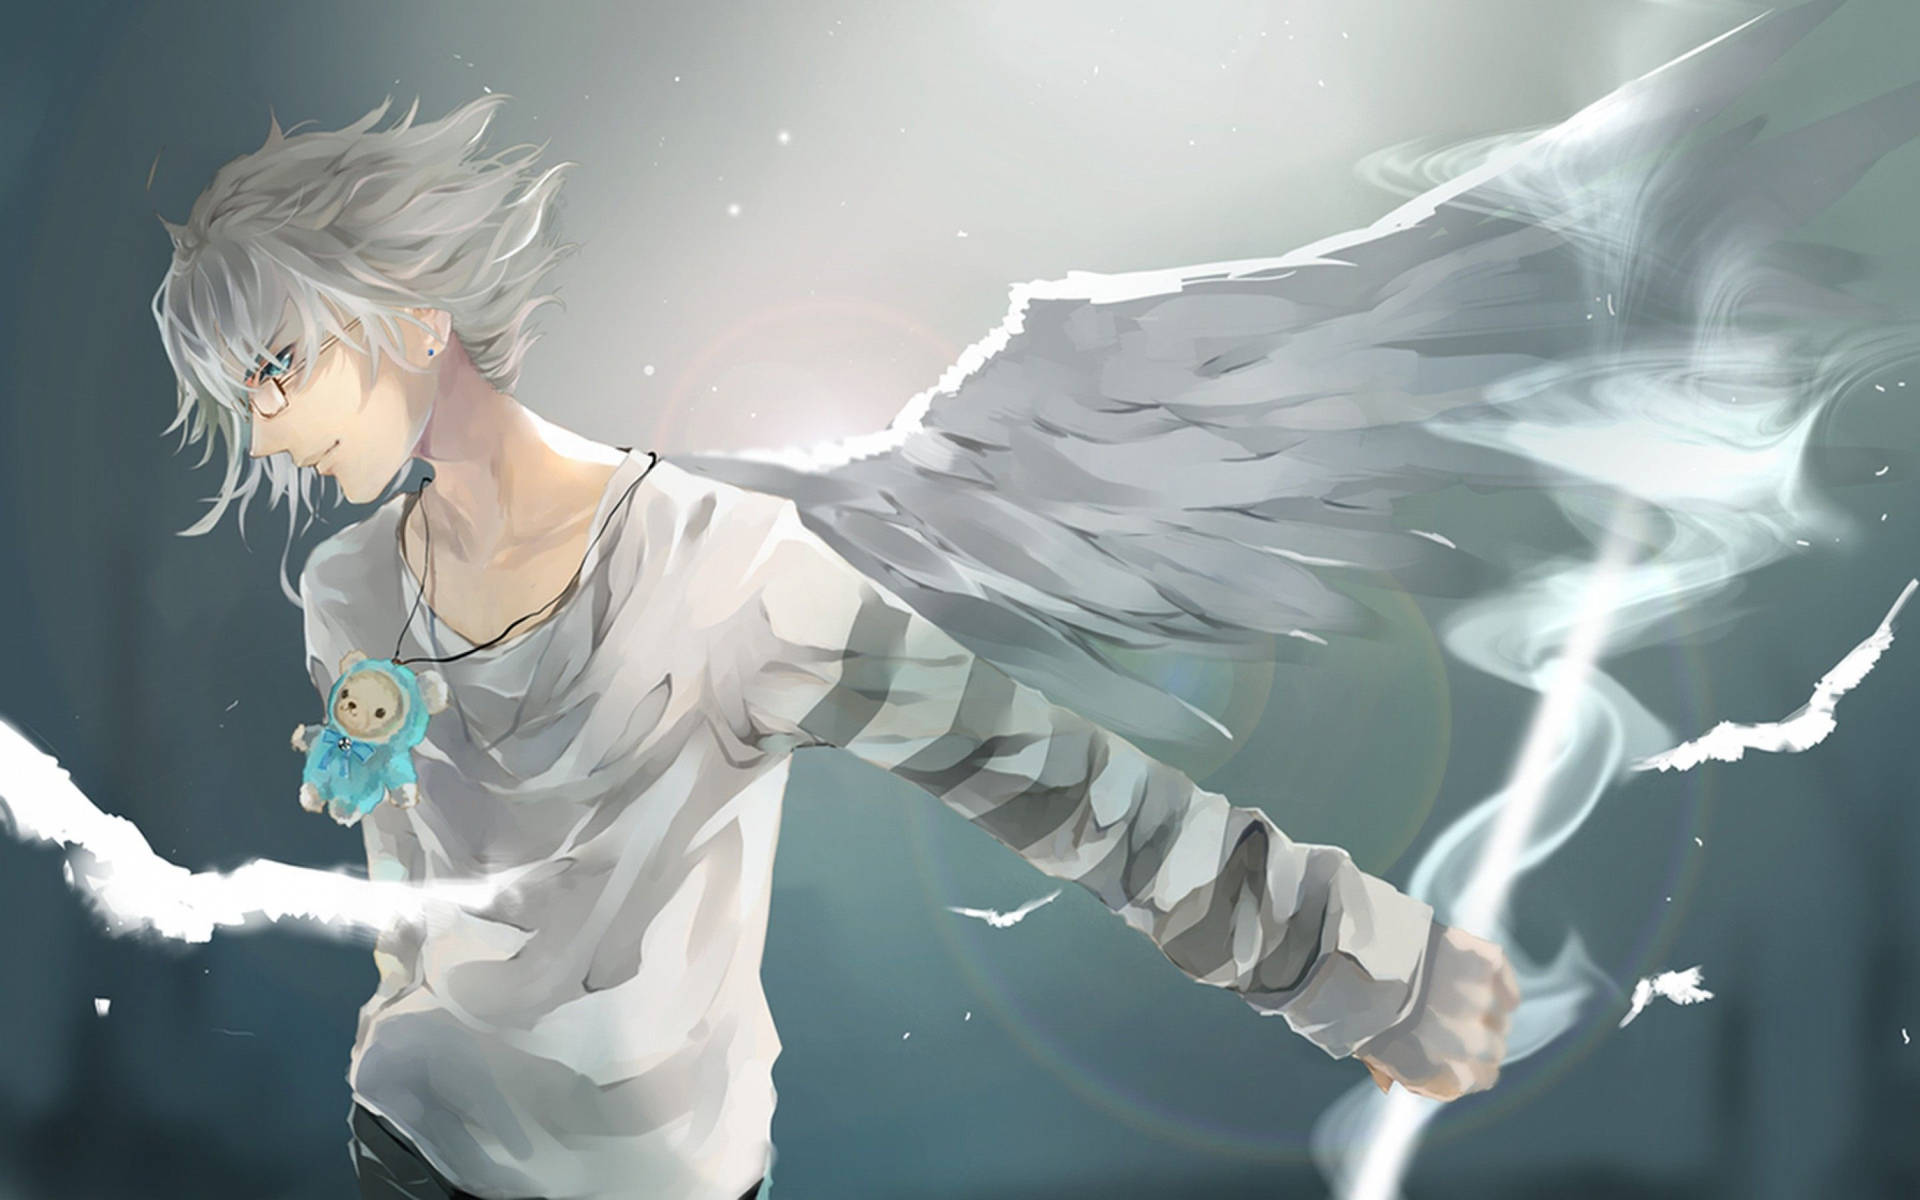 Anime Boy Angel Wallpaper Free Download | Anime Boy Angel Wa… | Flickr